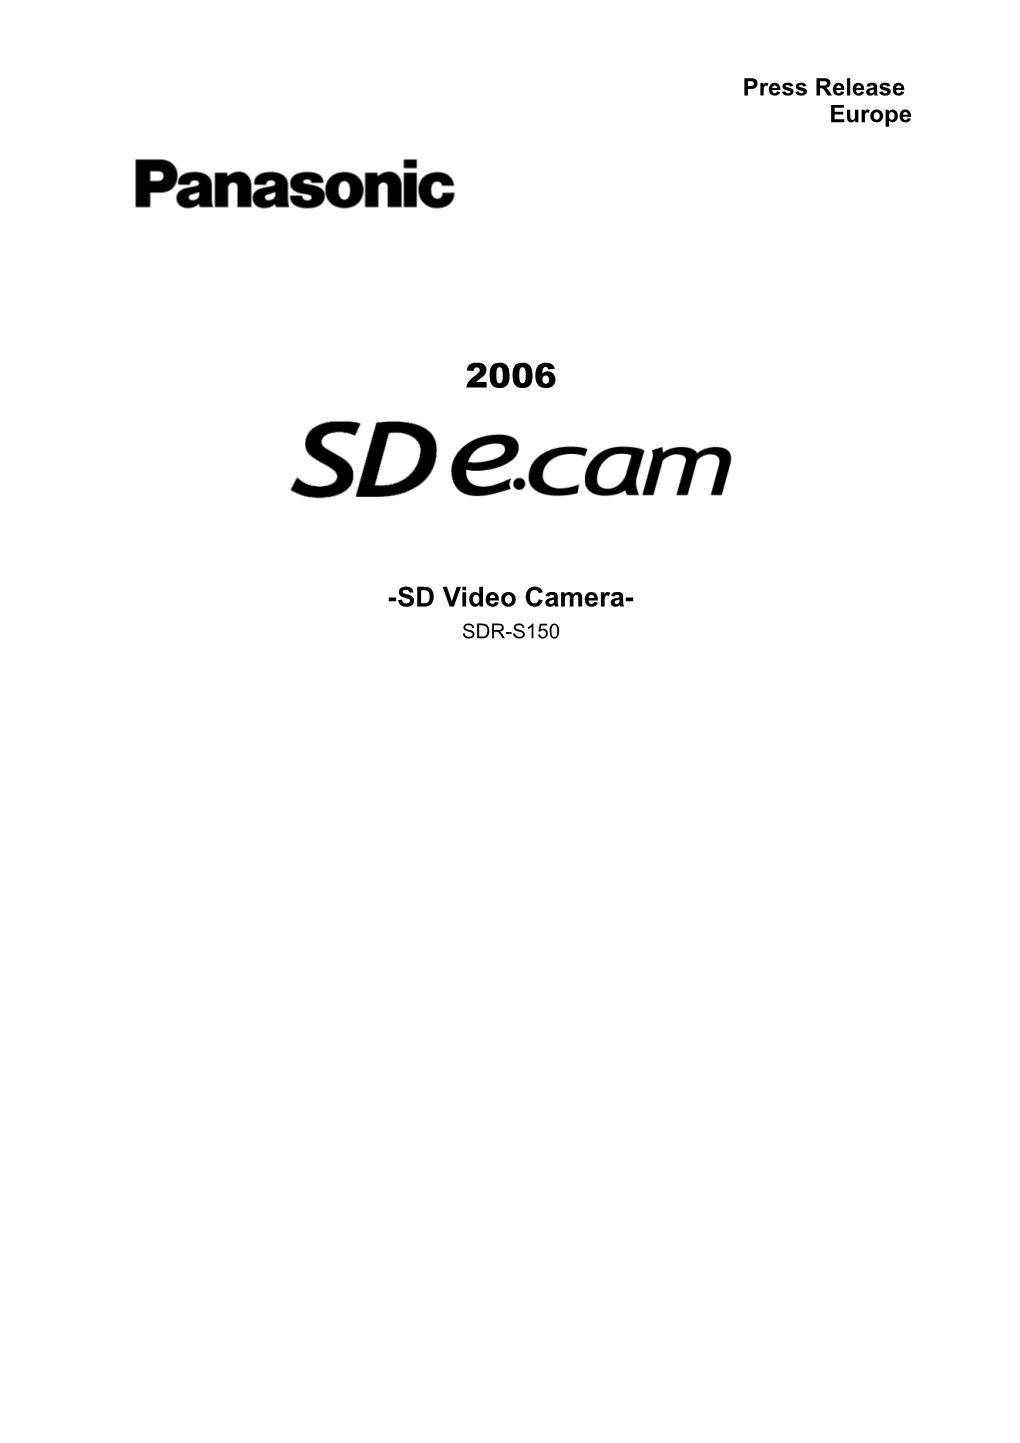 Stylish, Compact 3CCD SD Video Camera